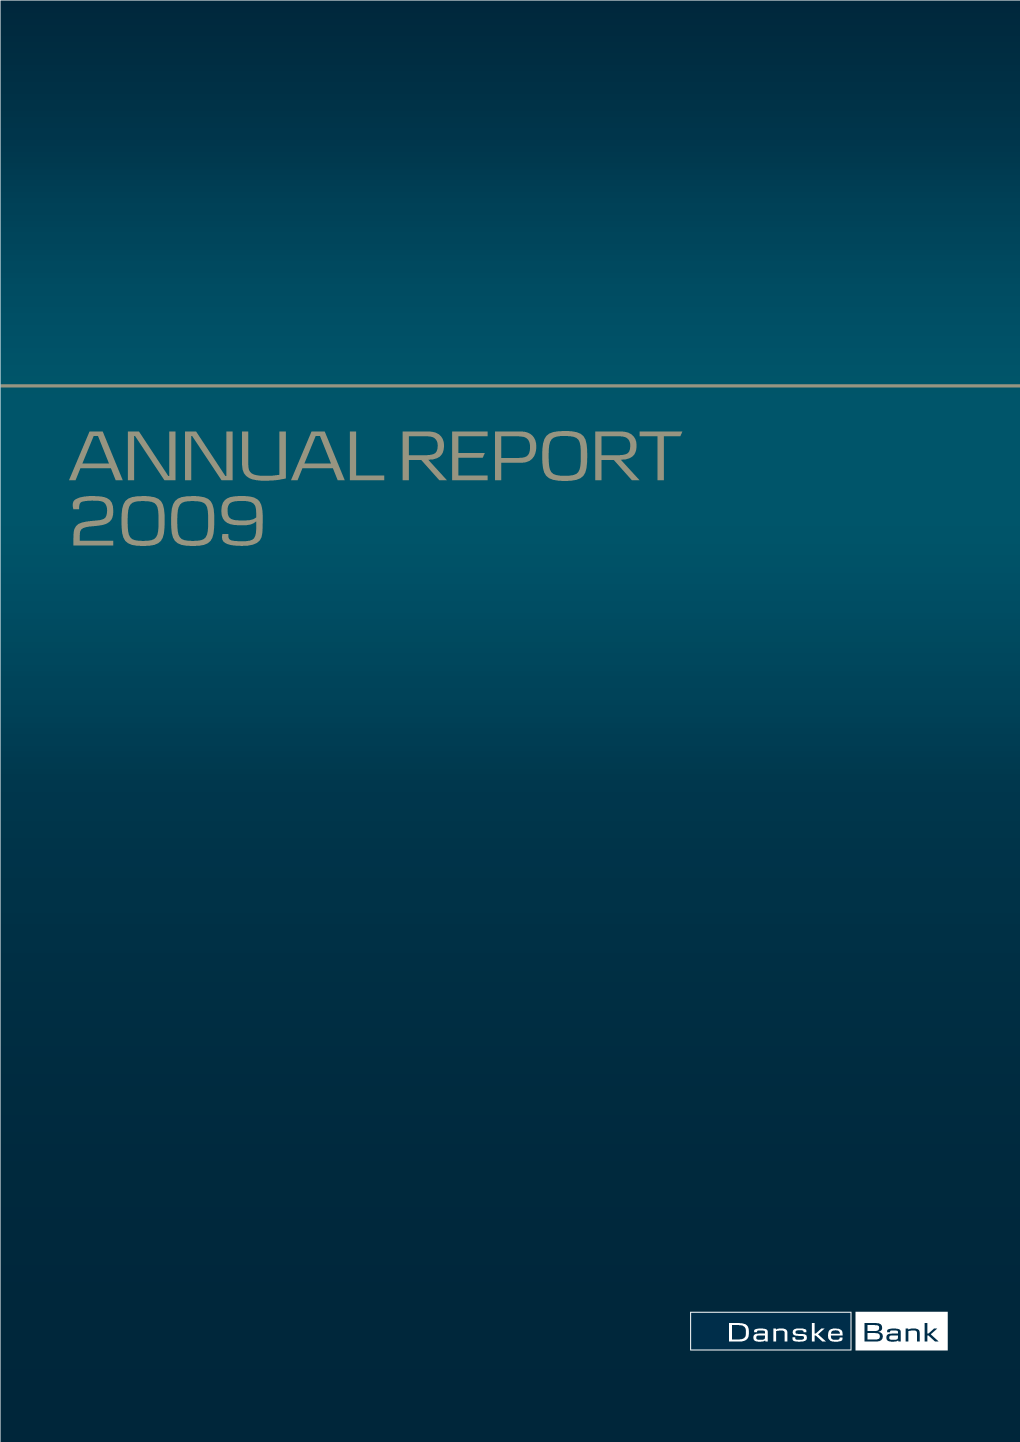 Danske Bank Annual Report 2009 Overview